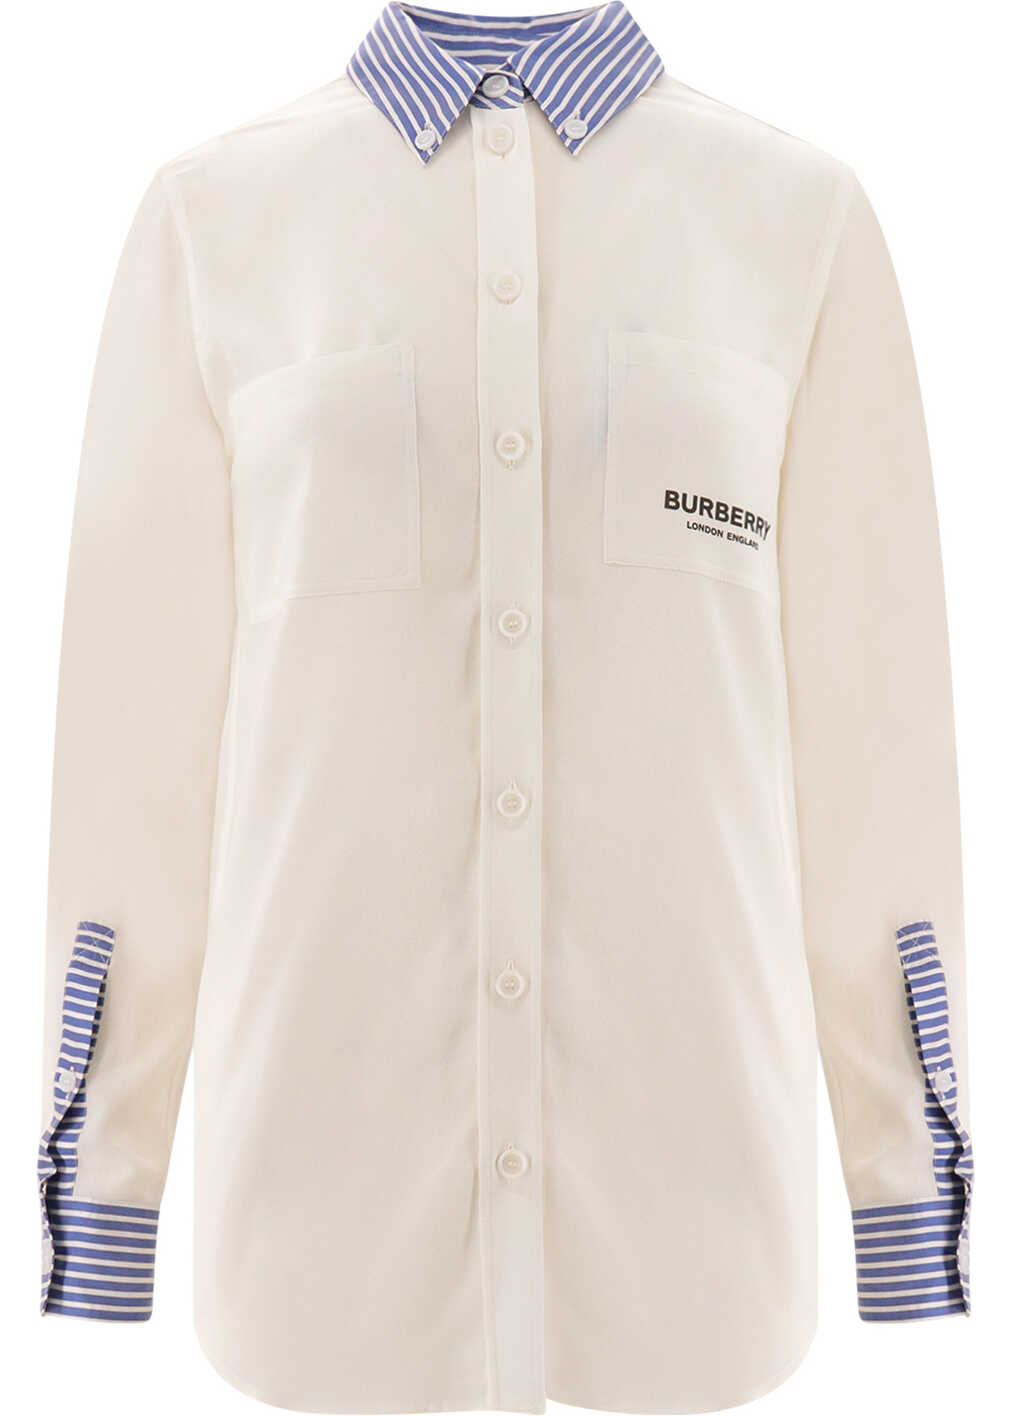 Burberry Shirt White